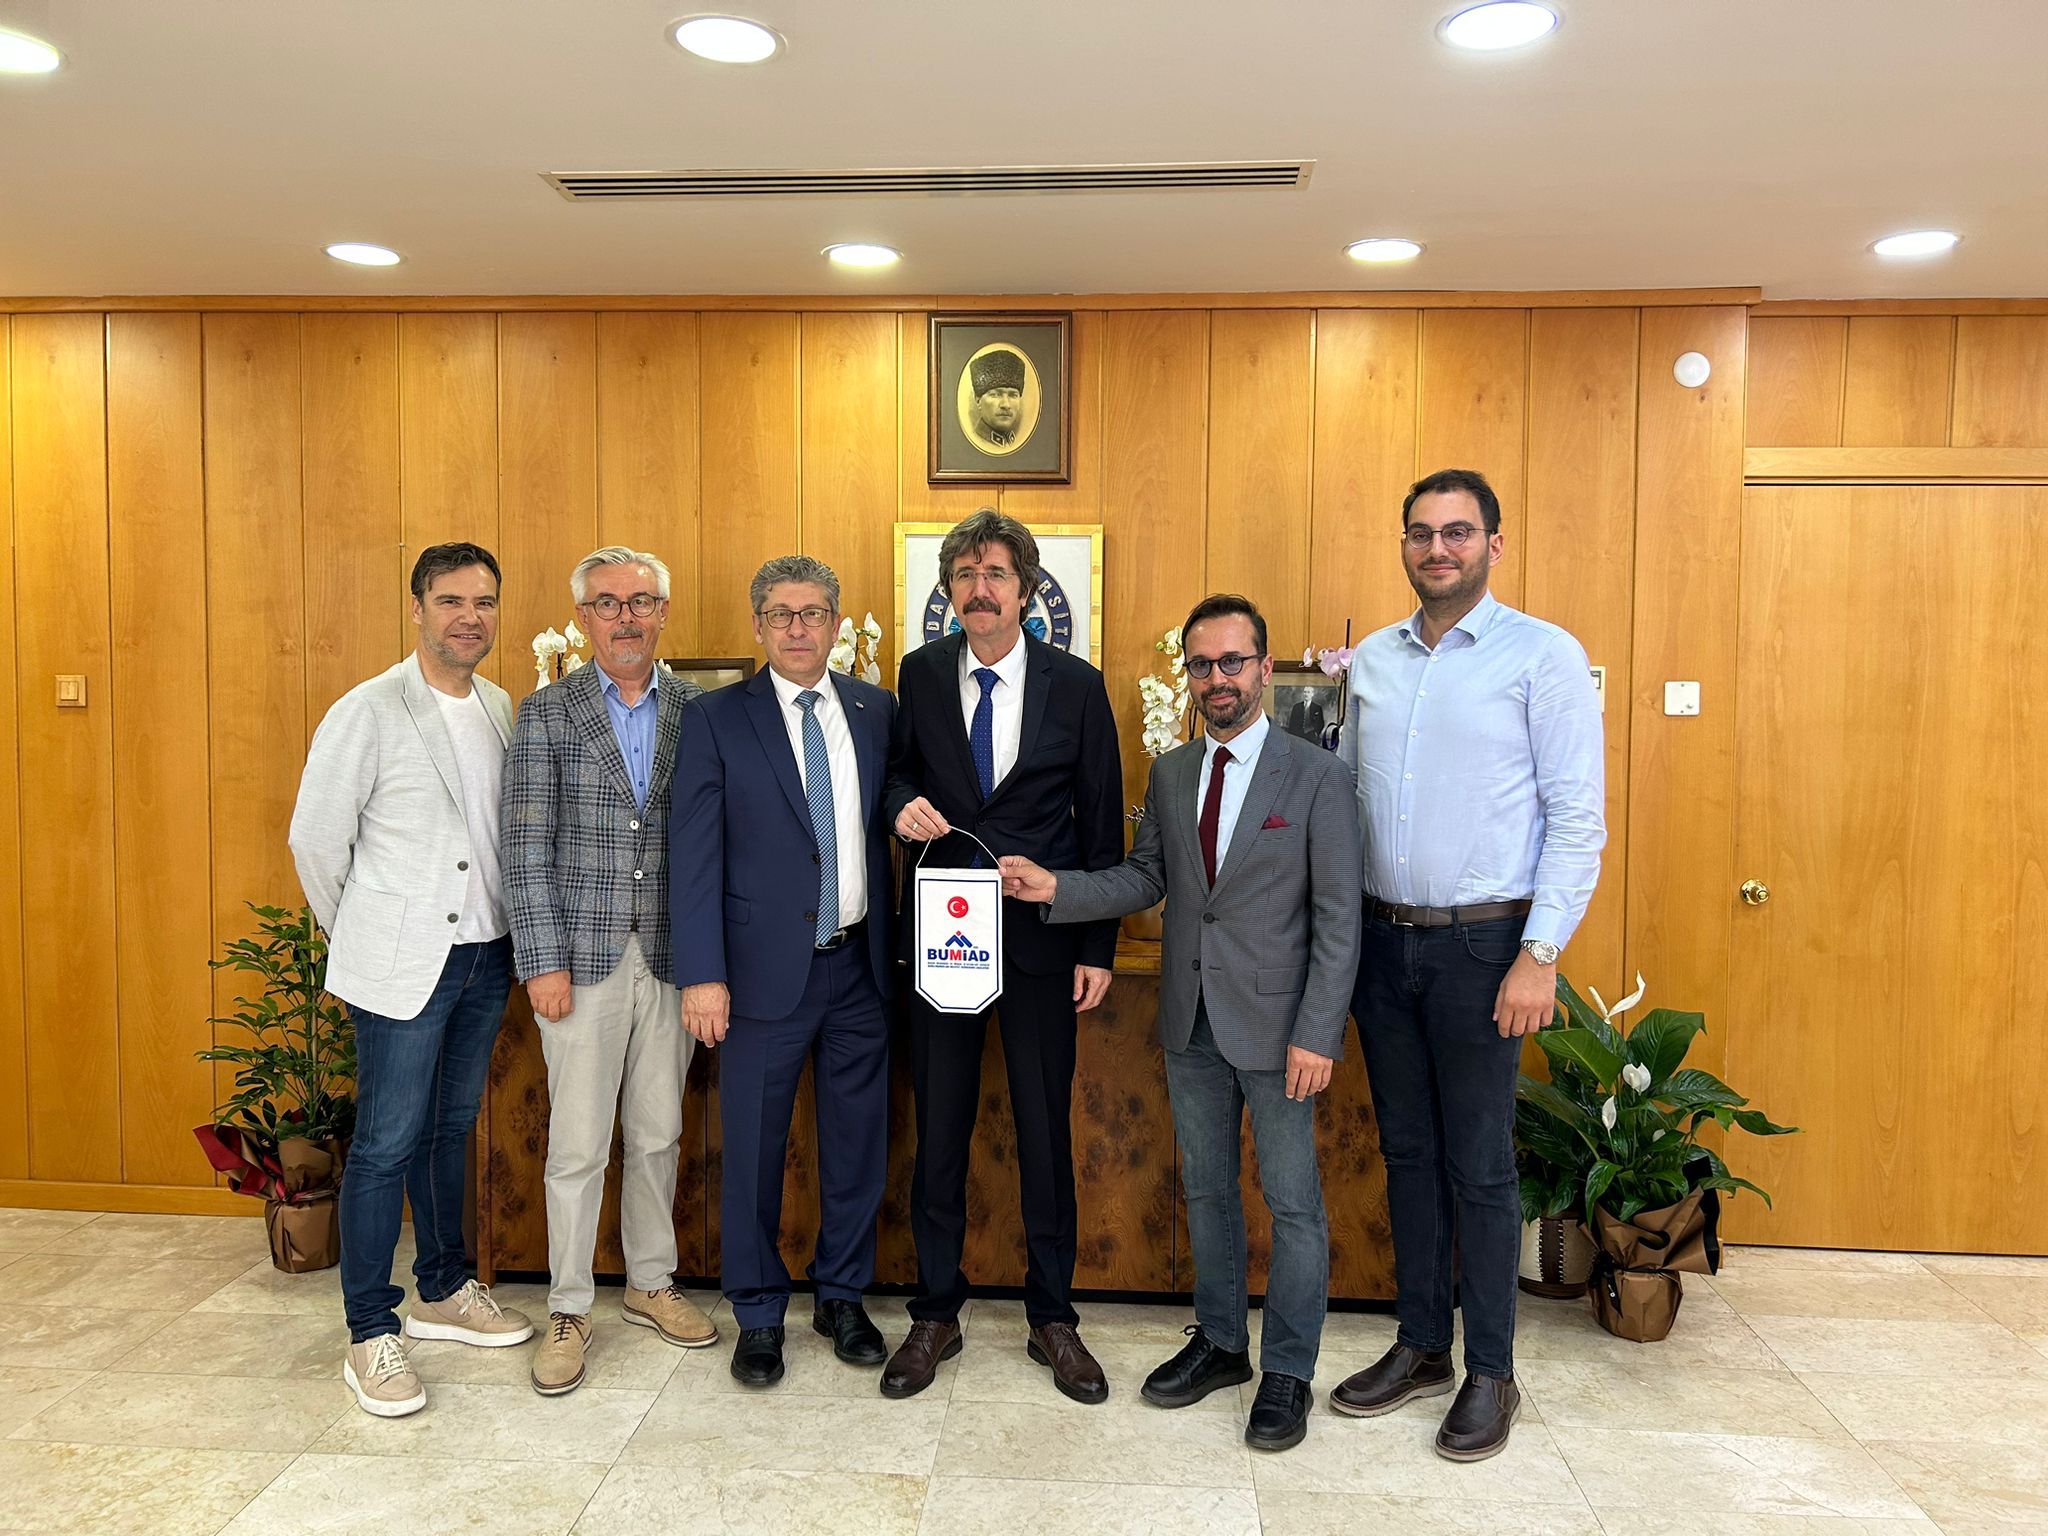 BUMİAD, Bursa Uludağ Üniversitesi Yeni Rektörü Sn. Prof. Dr Feridun YILMAZ'ı ziyaret etti. 